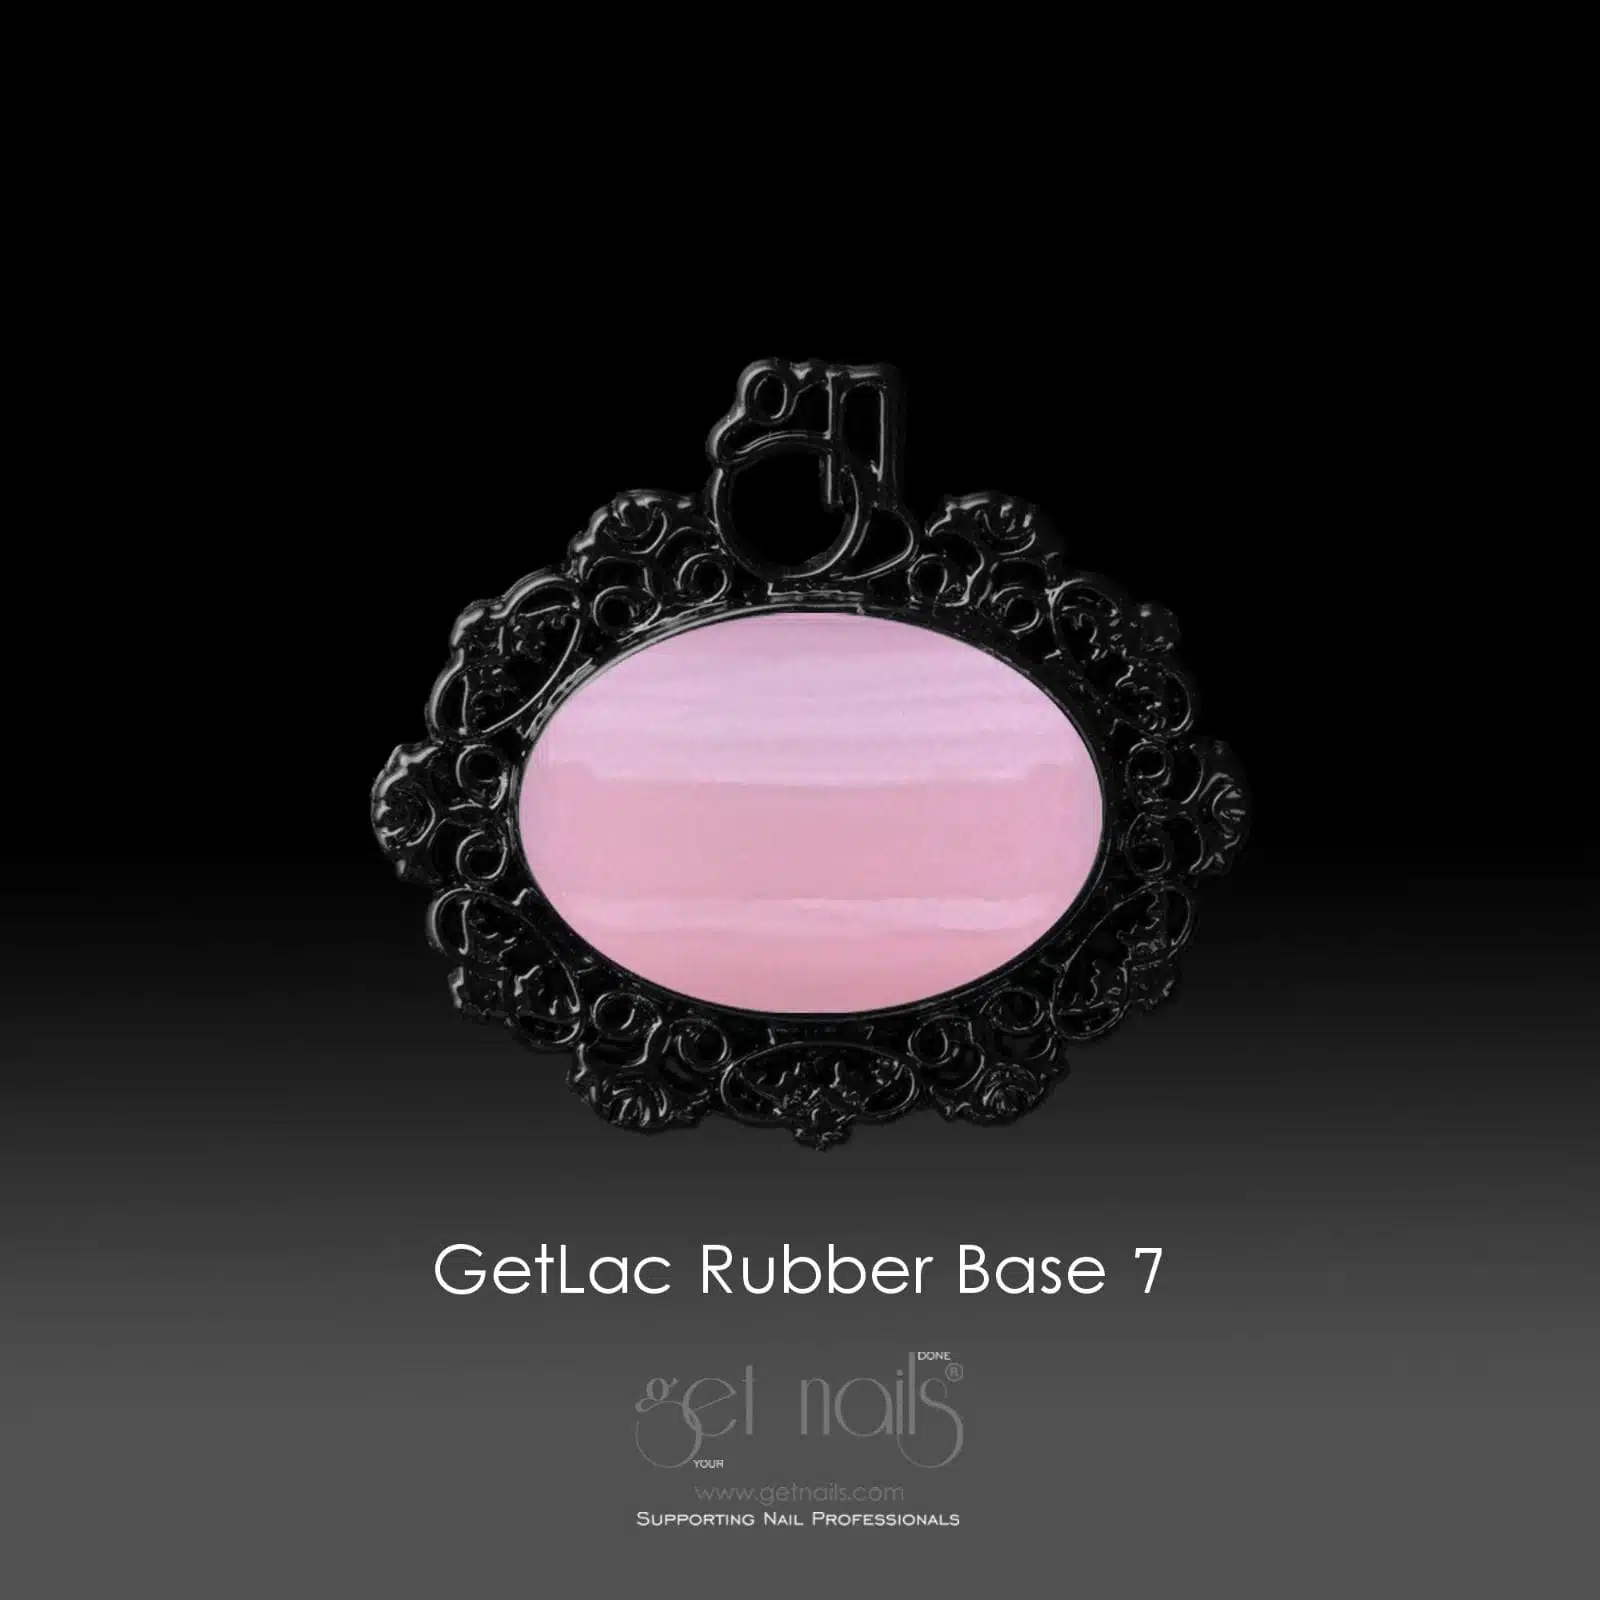 Get Nails Austria - GetLac Rubber Base 7 15g